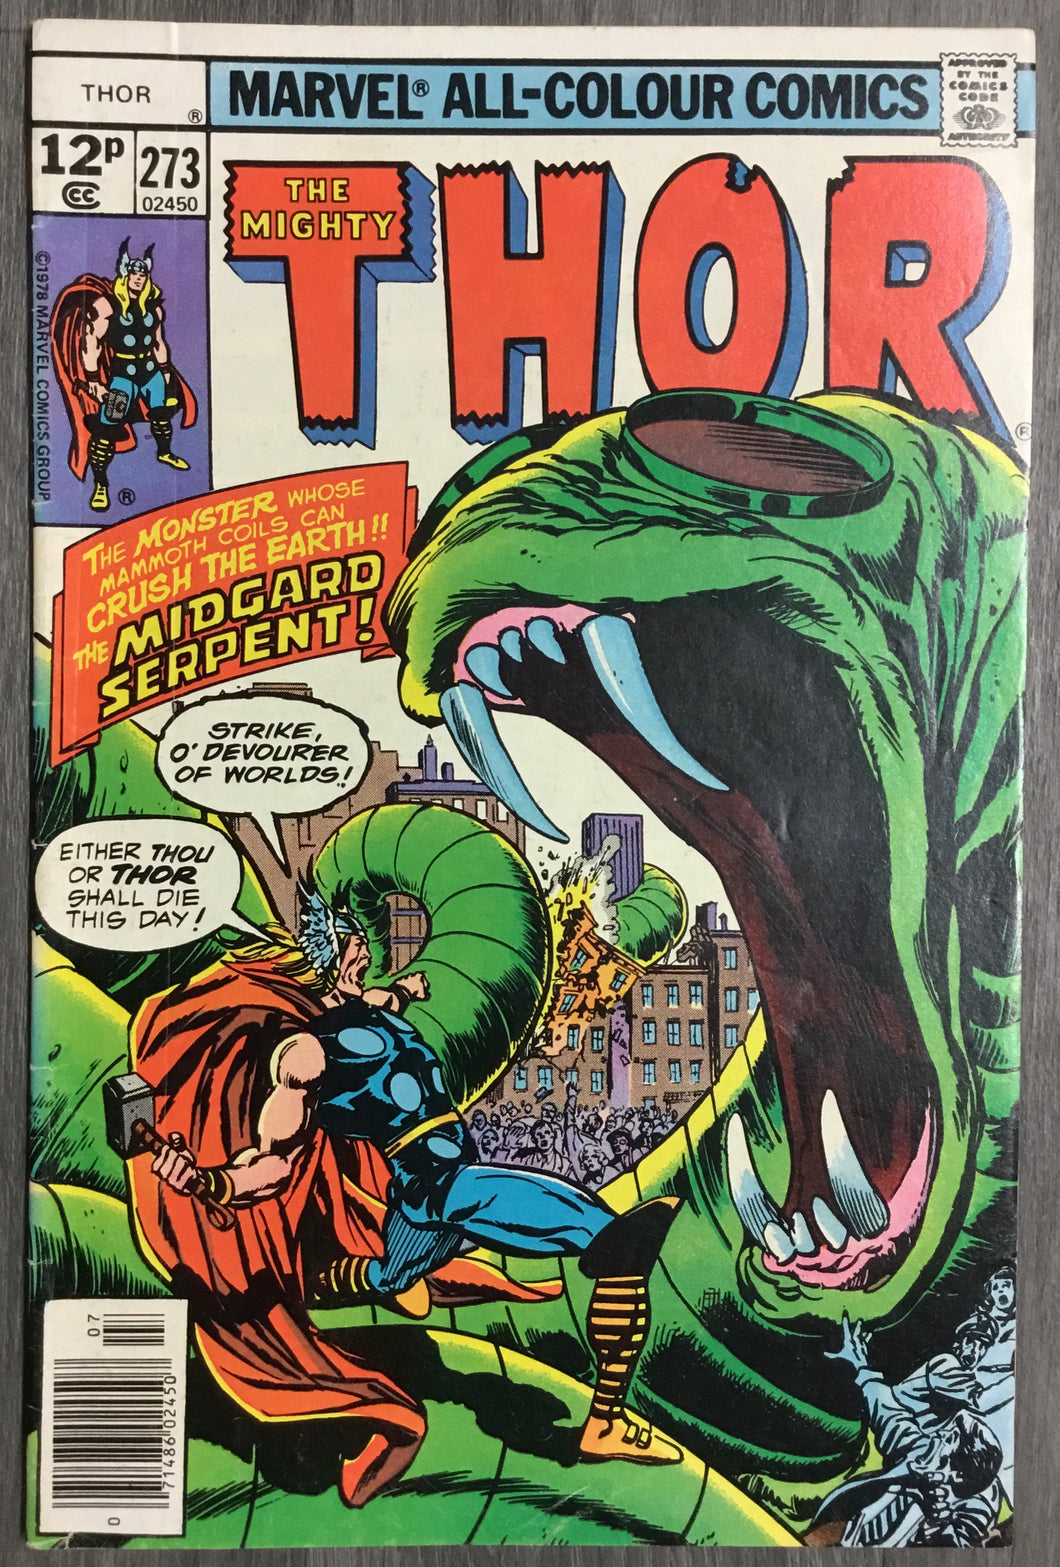 The Mighty Thor No. #273 1978 Marvel Comics